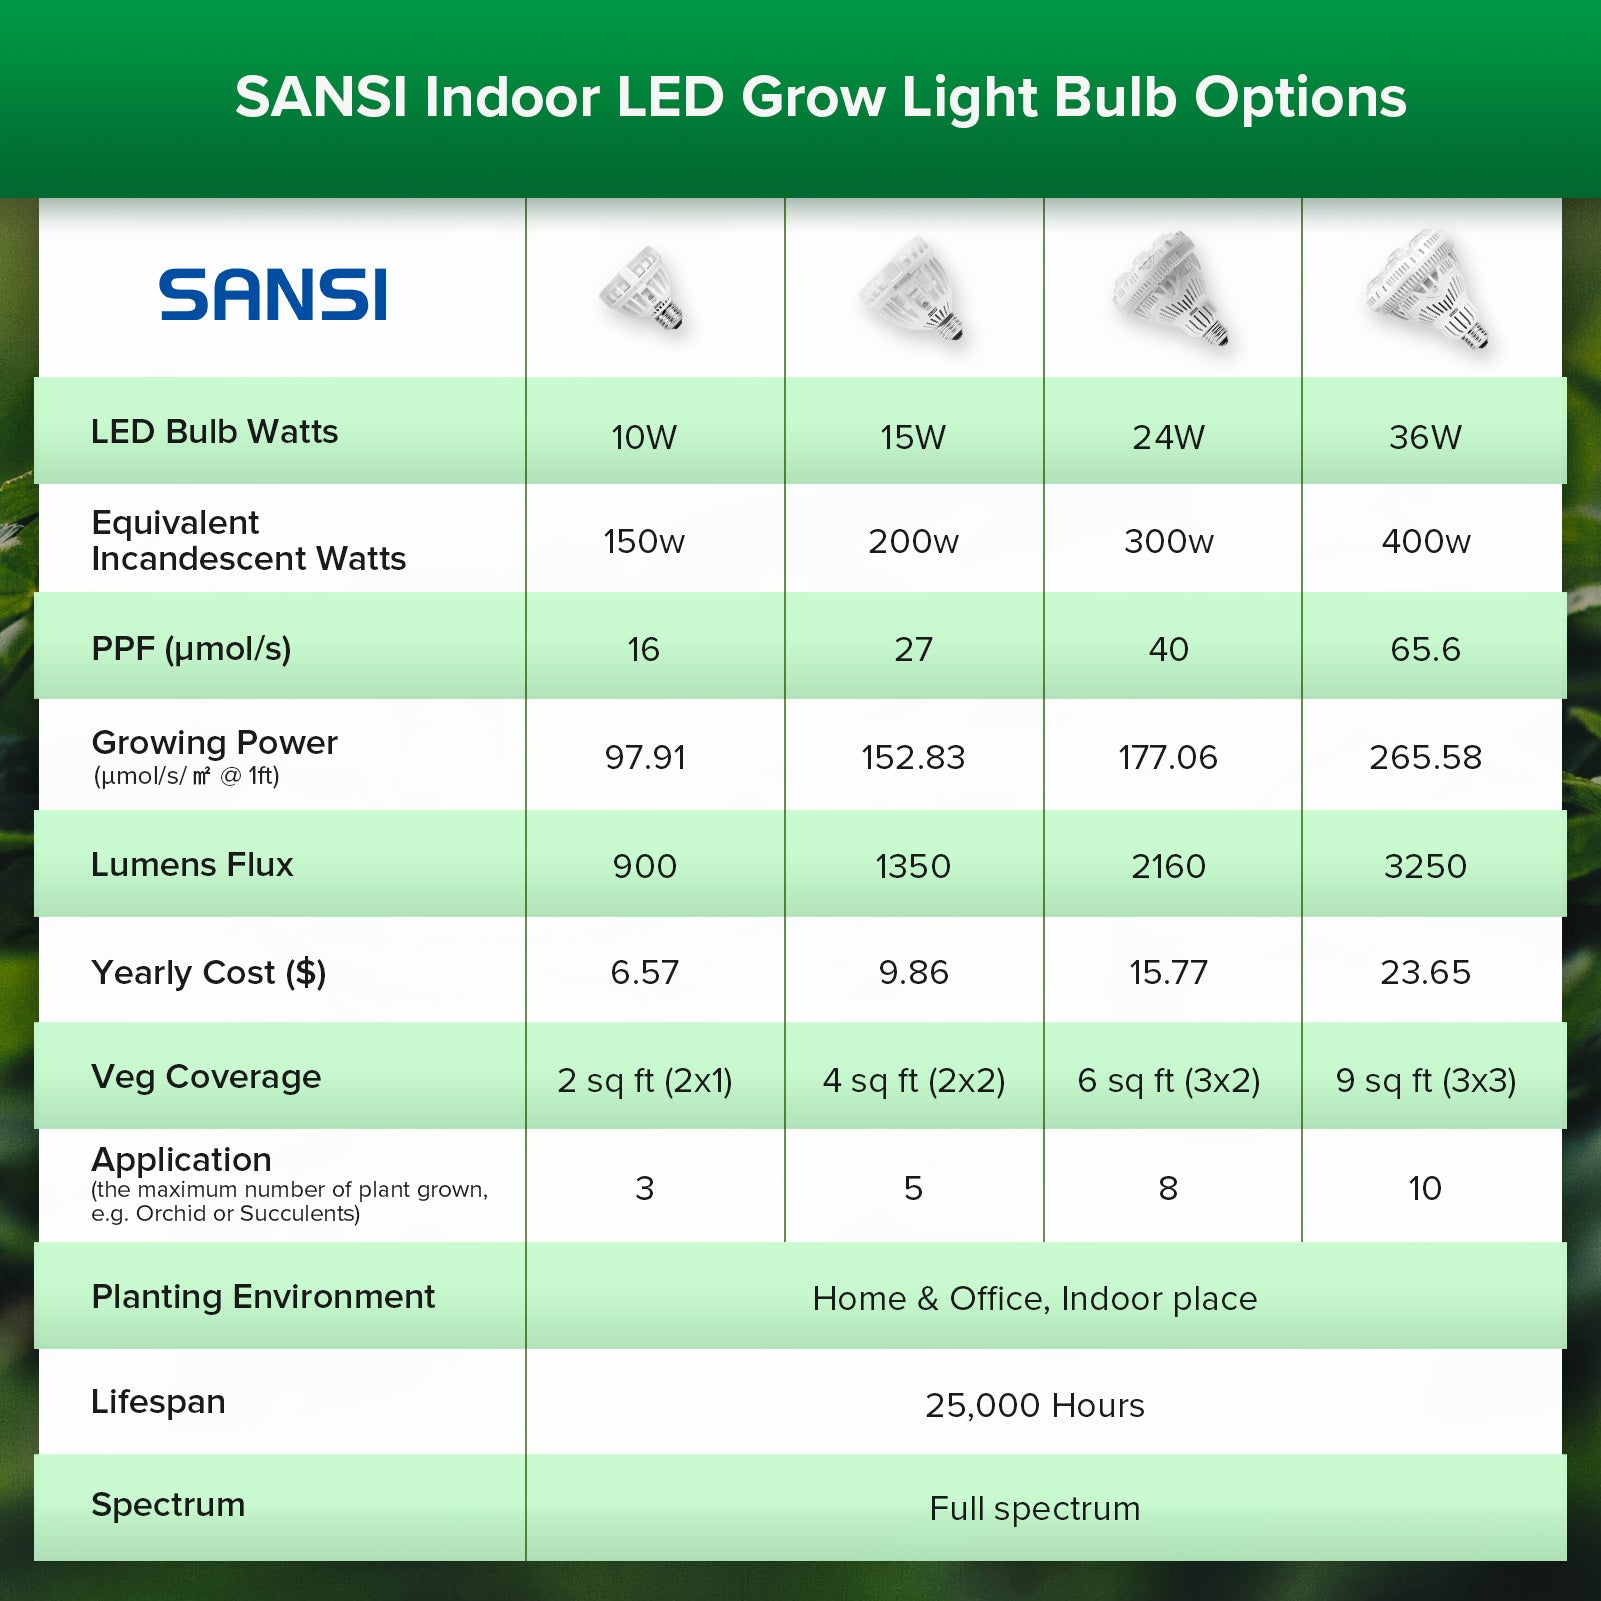 SANSI indoor led grow light bulb options